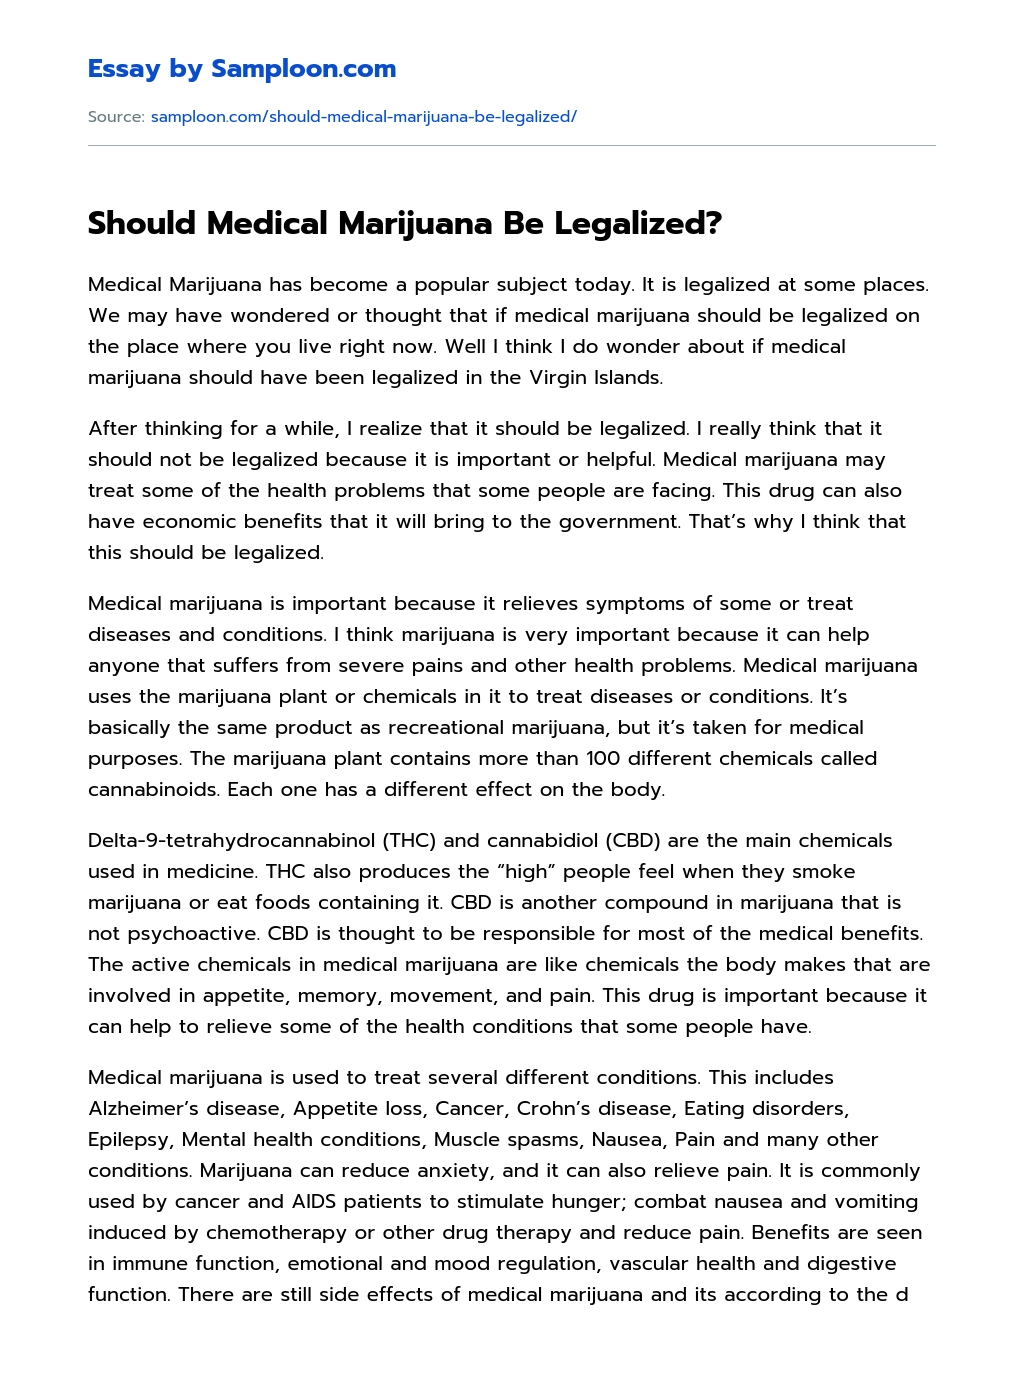 Should Medical Marijuana Be Legalized? essay